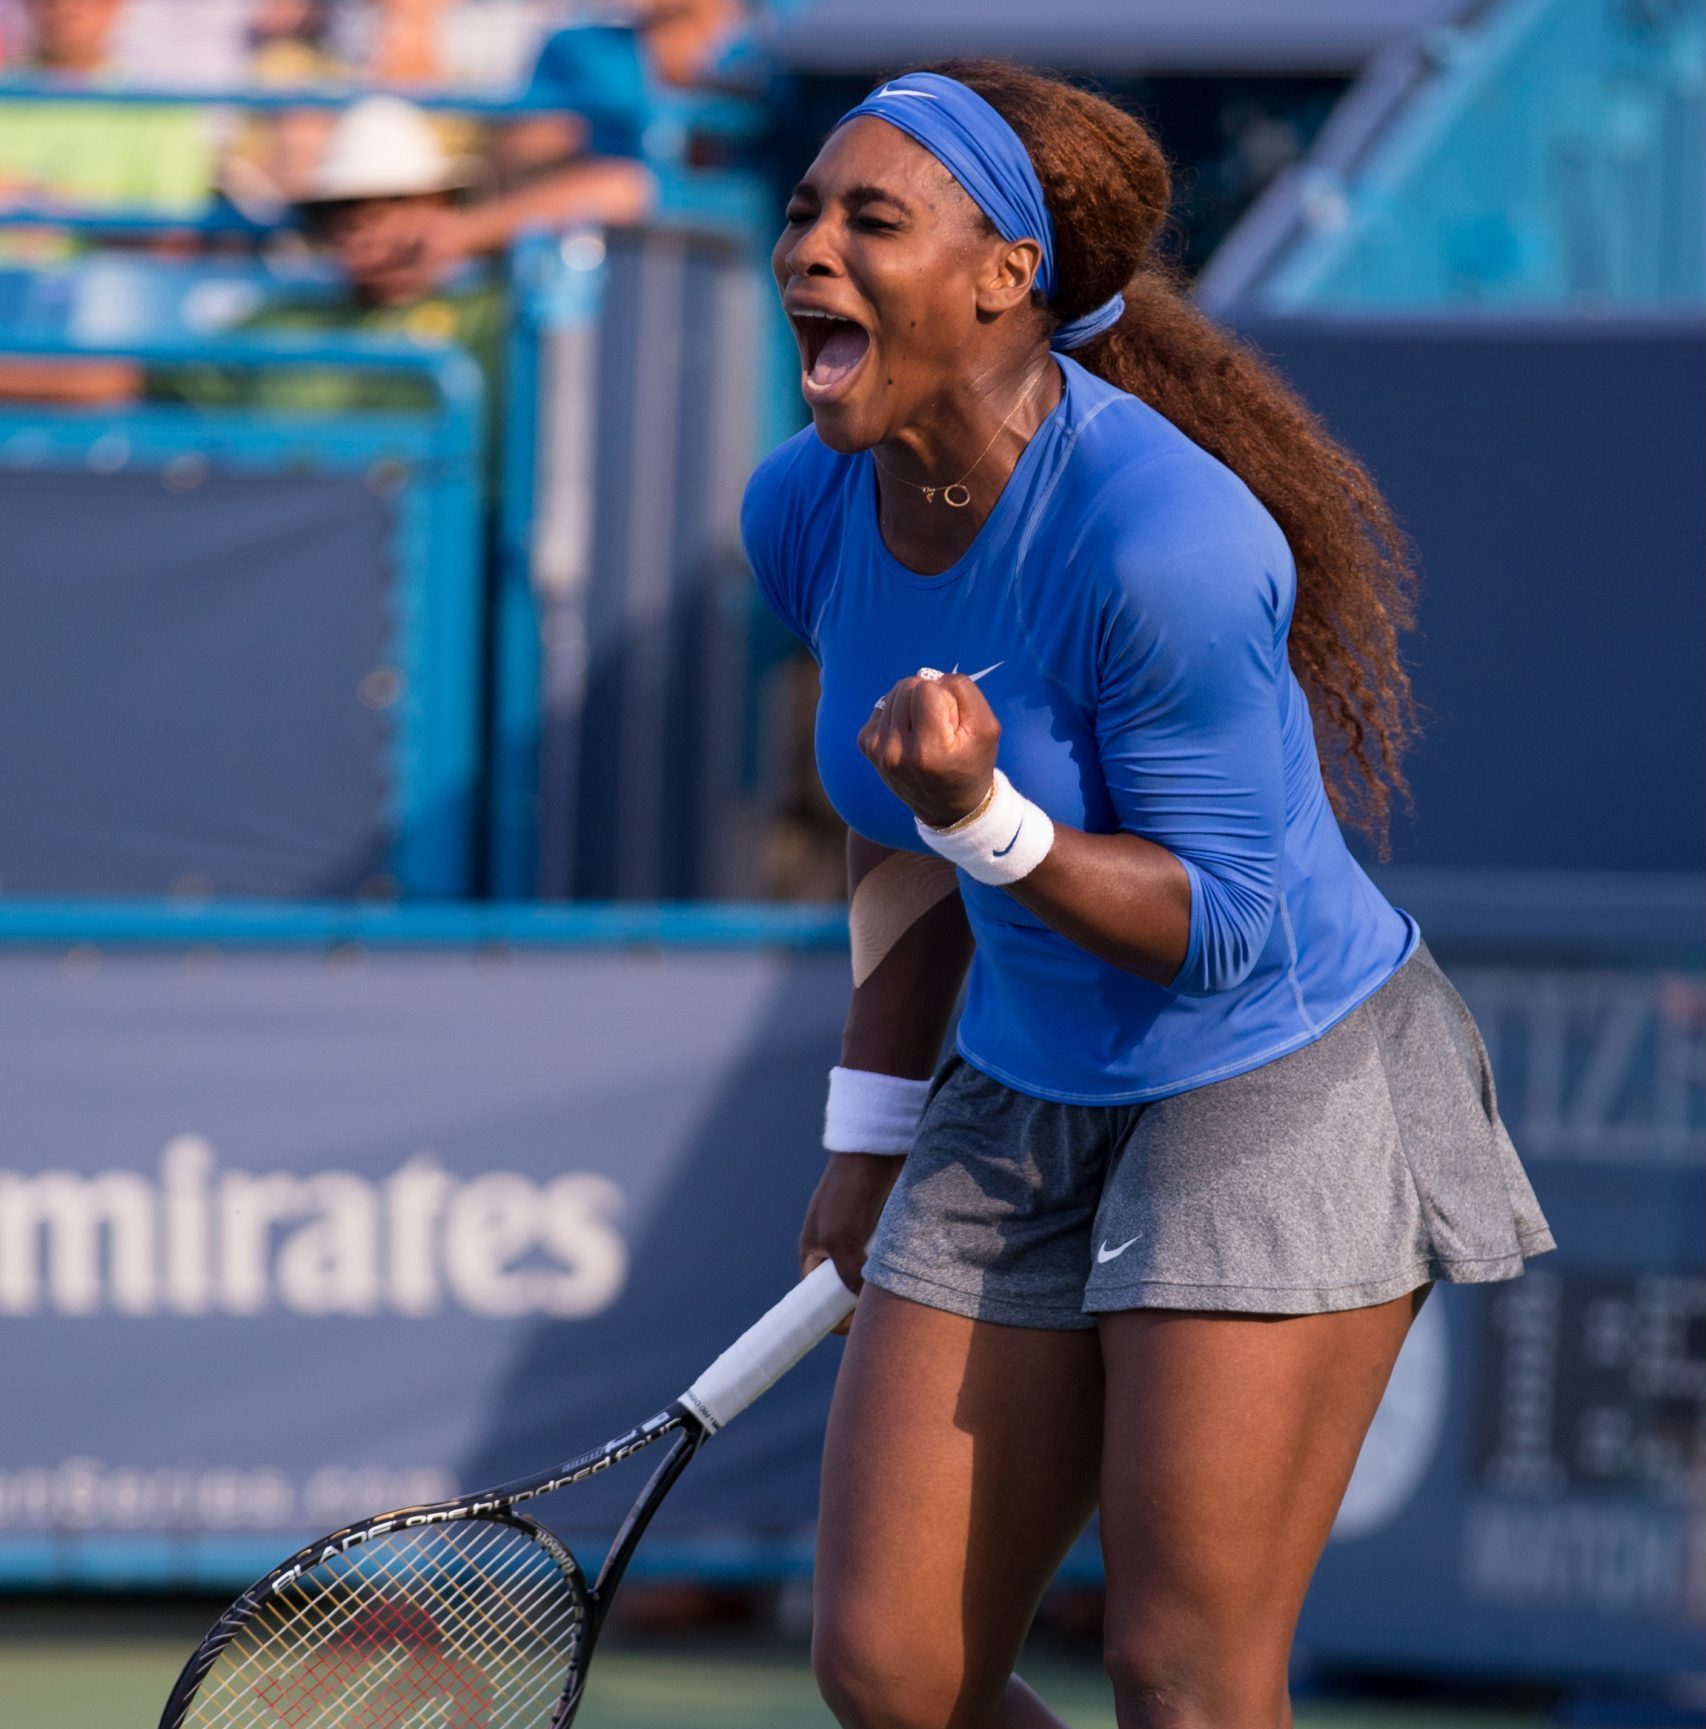 Serena Williams at Western & Southern Open a poplar sporting event held in Cincinnati